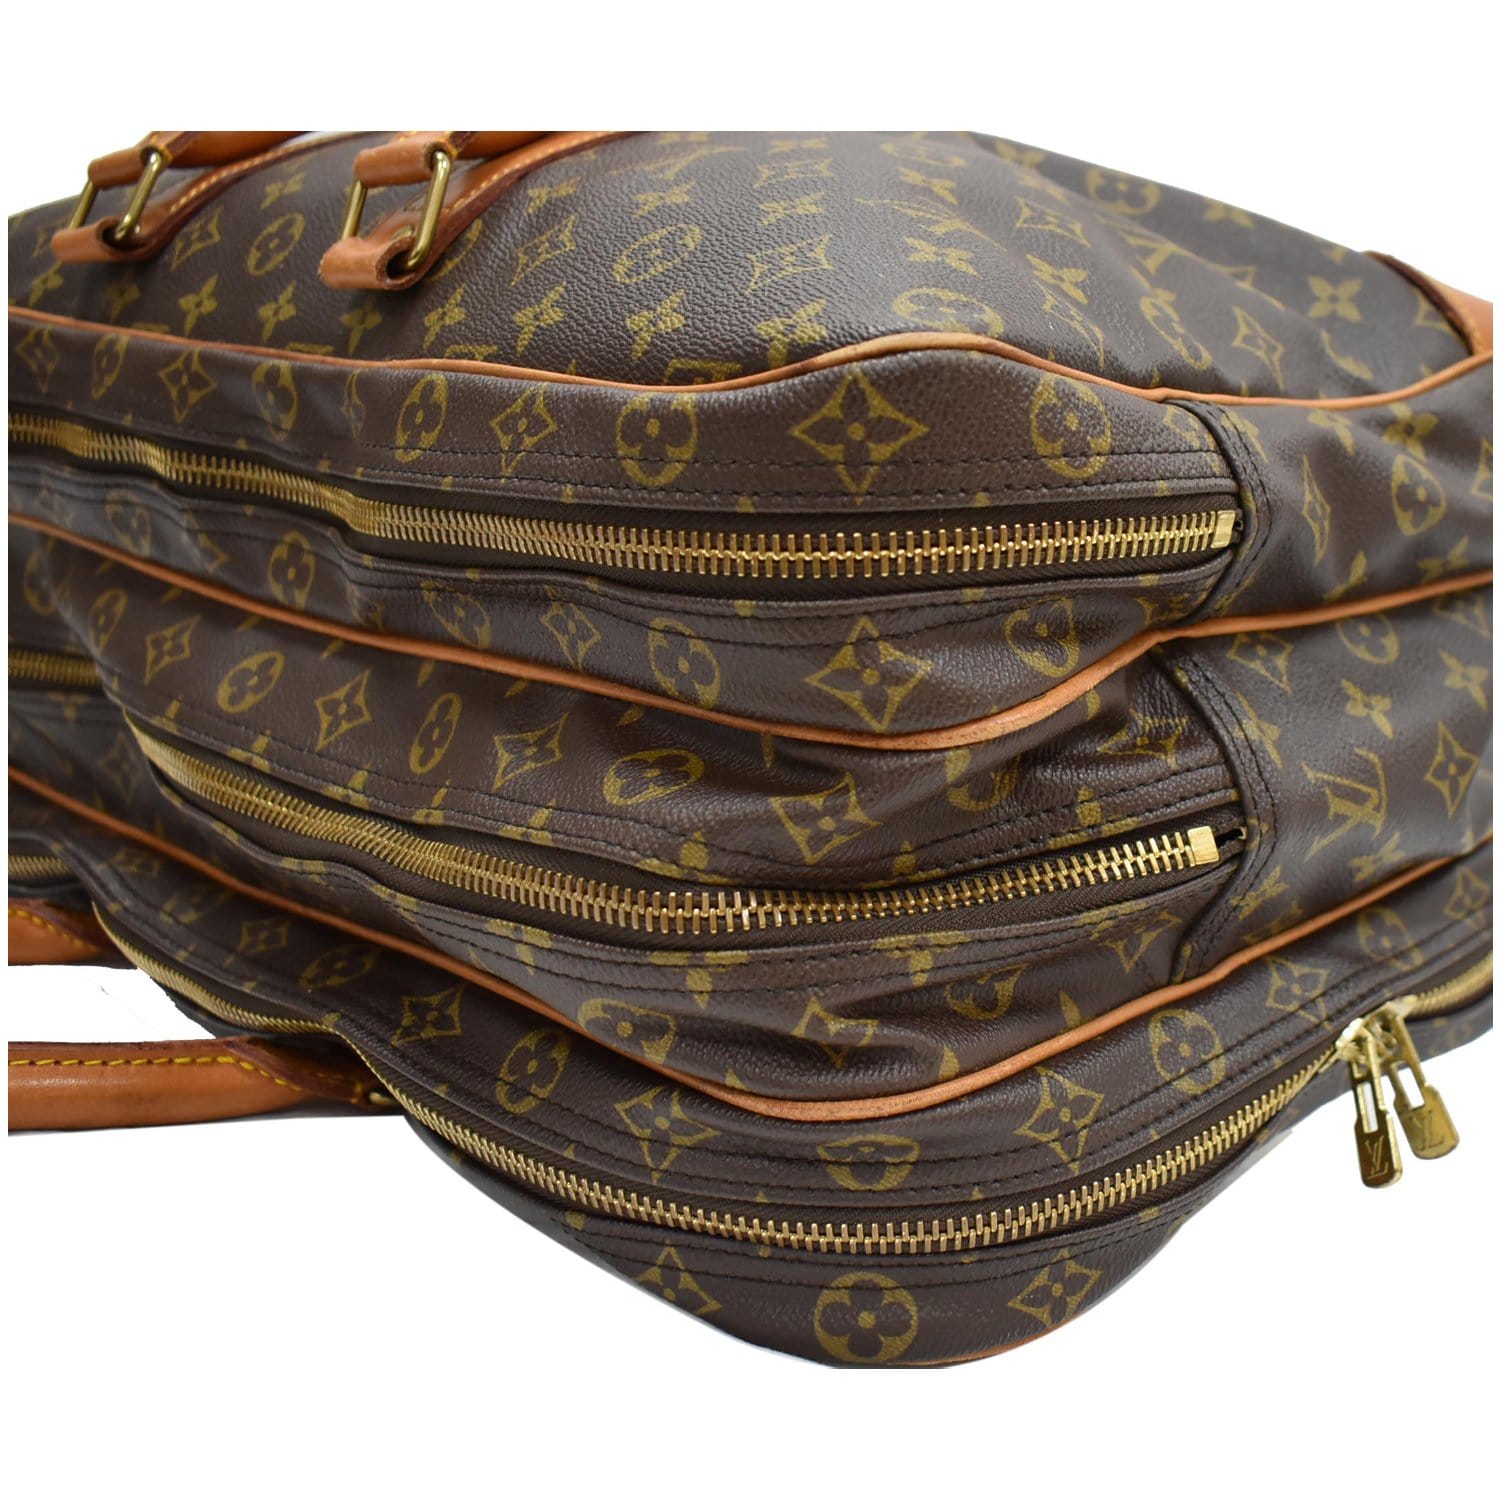 Louis Vuitton XL Monogram Sirius 65 Suitcase Luggage 6LV1025 – Bagriculture